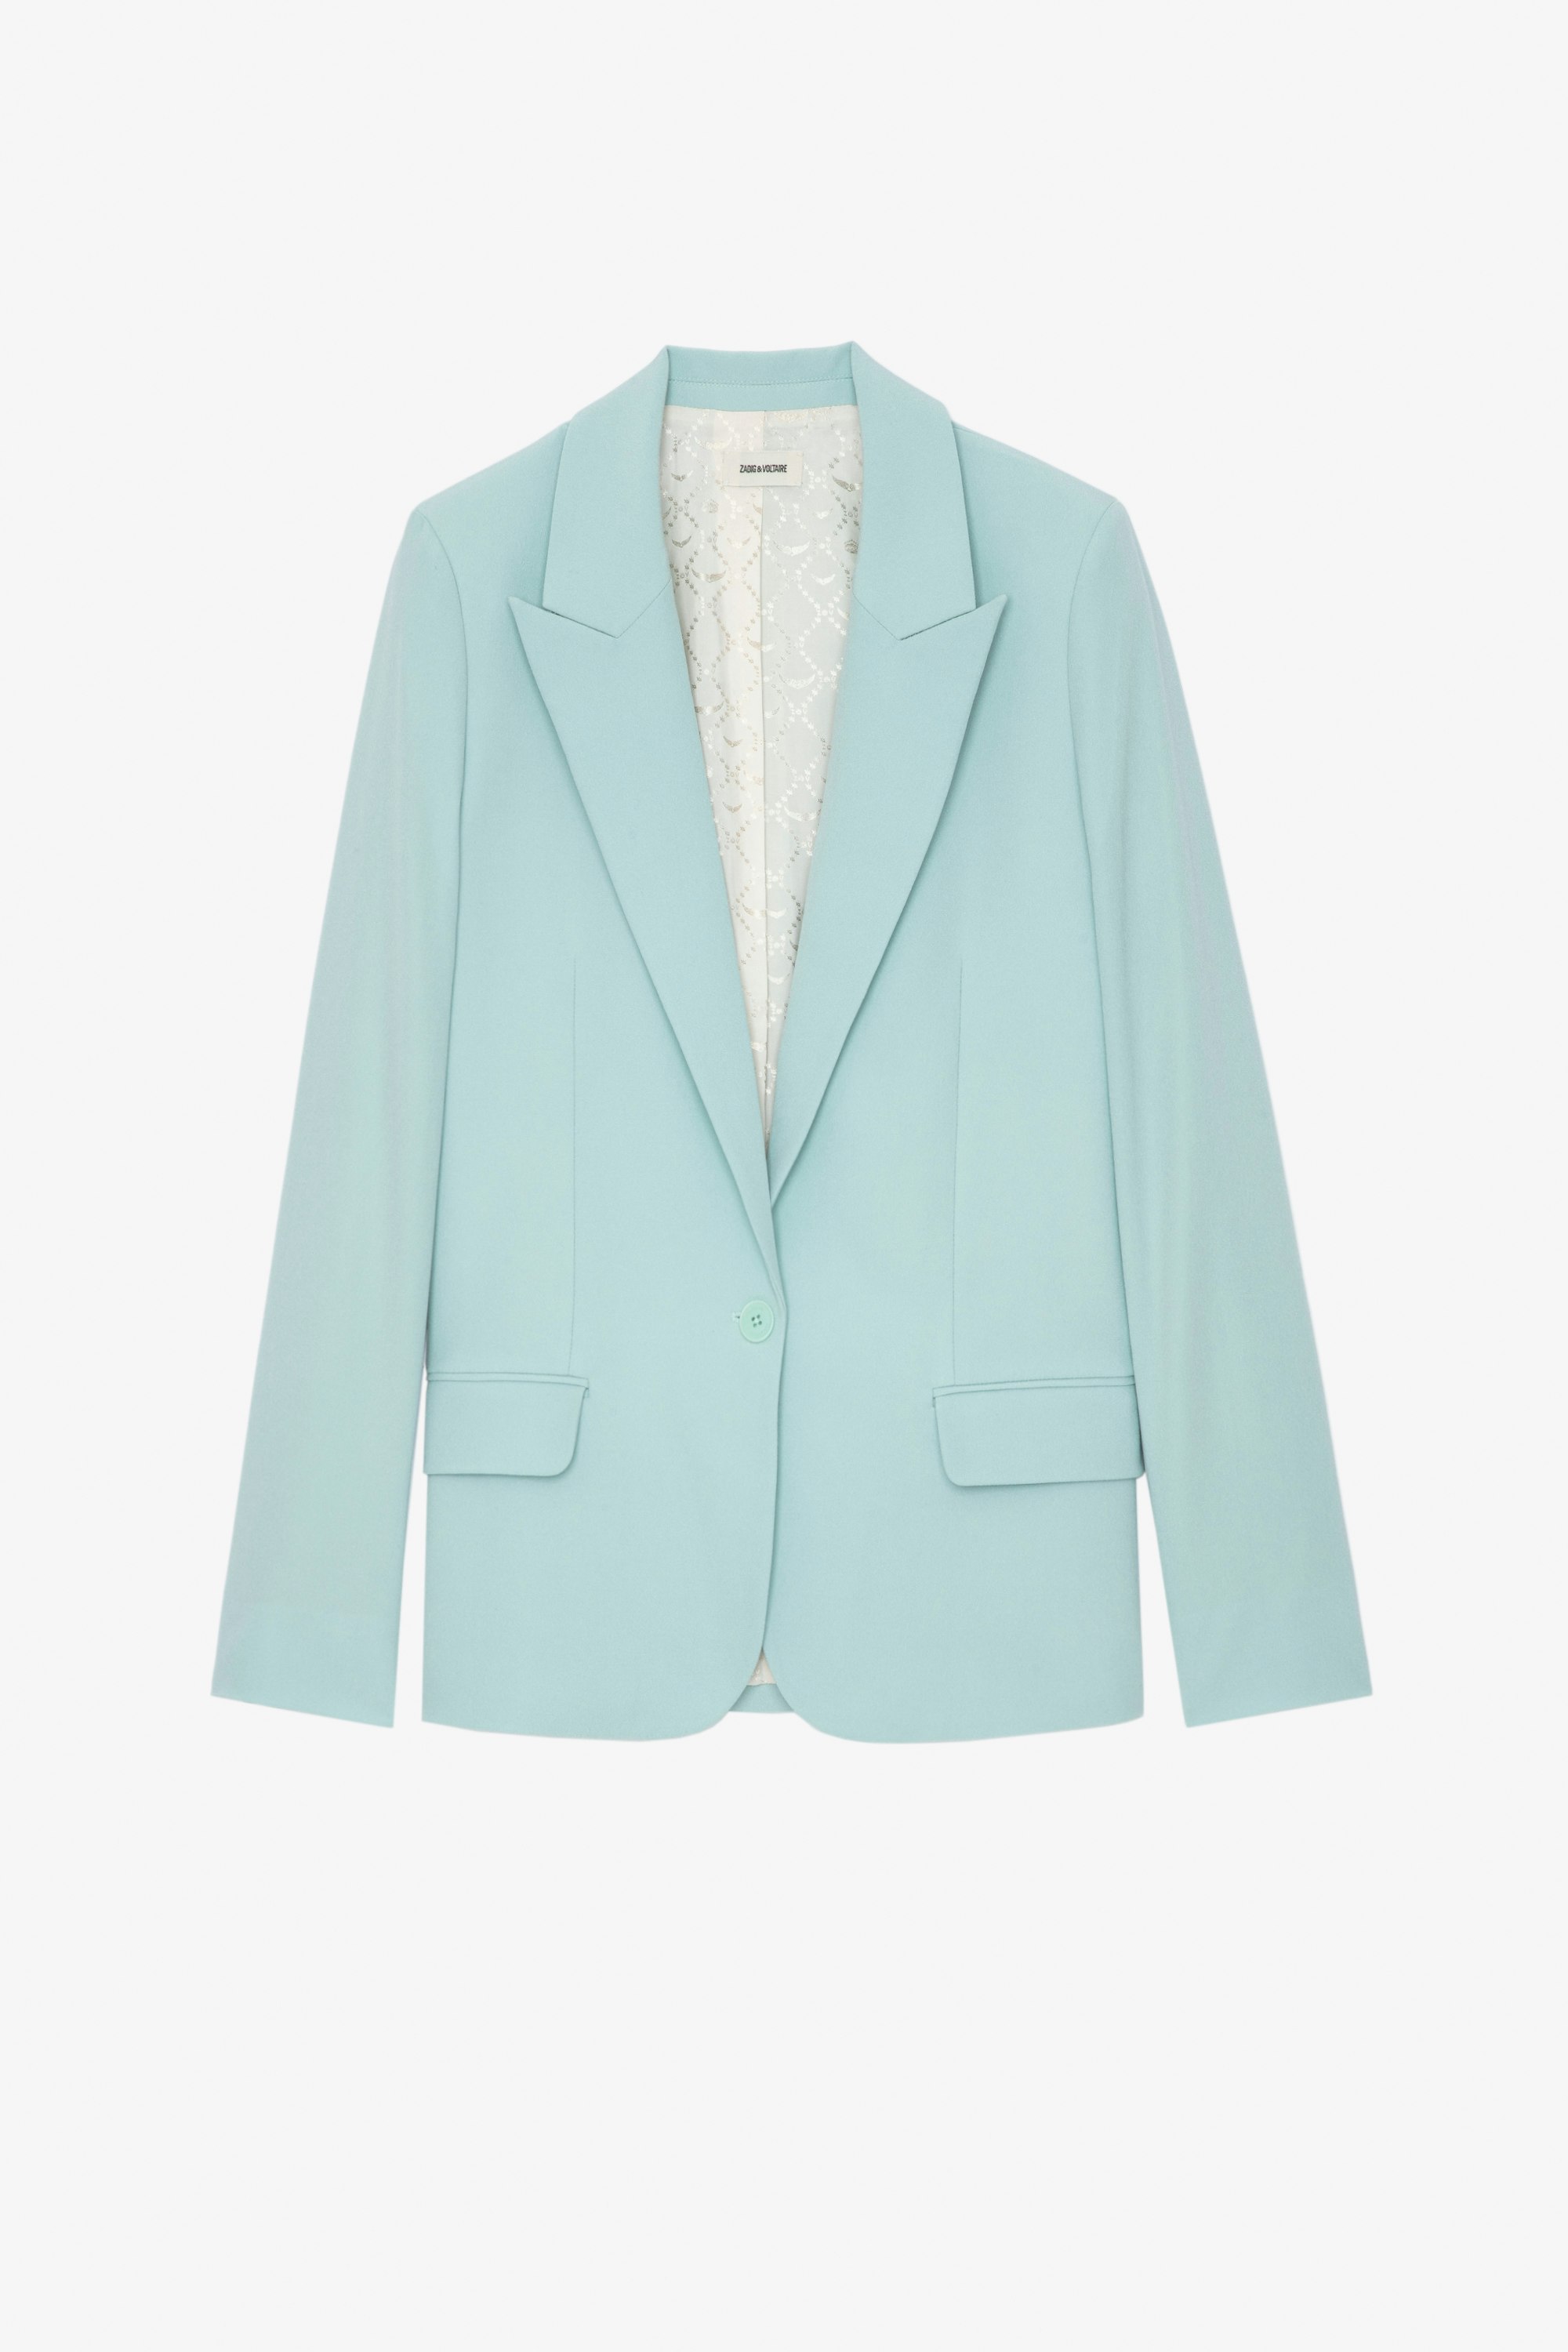 Voyage Blazer Women's sky blue suit jacket